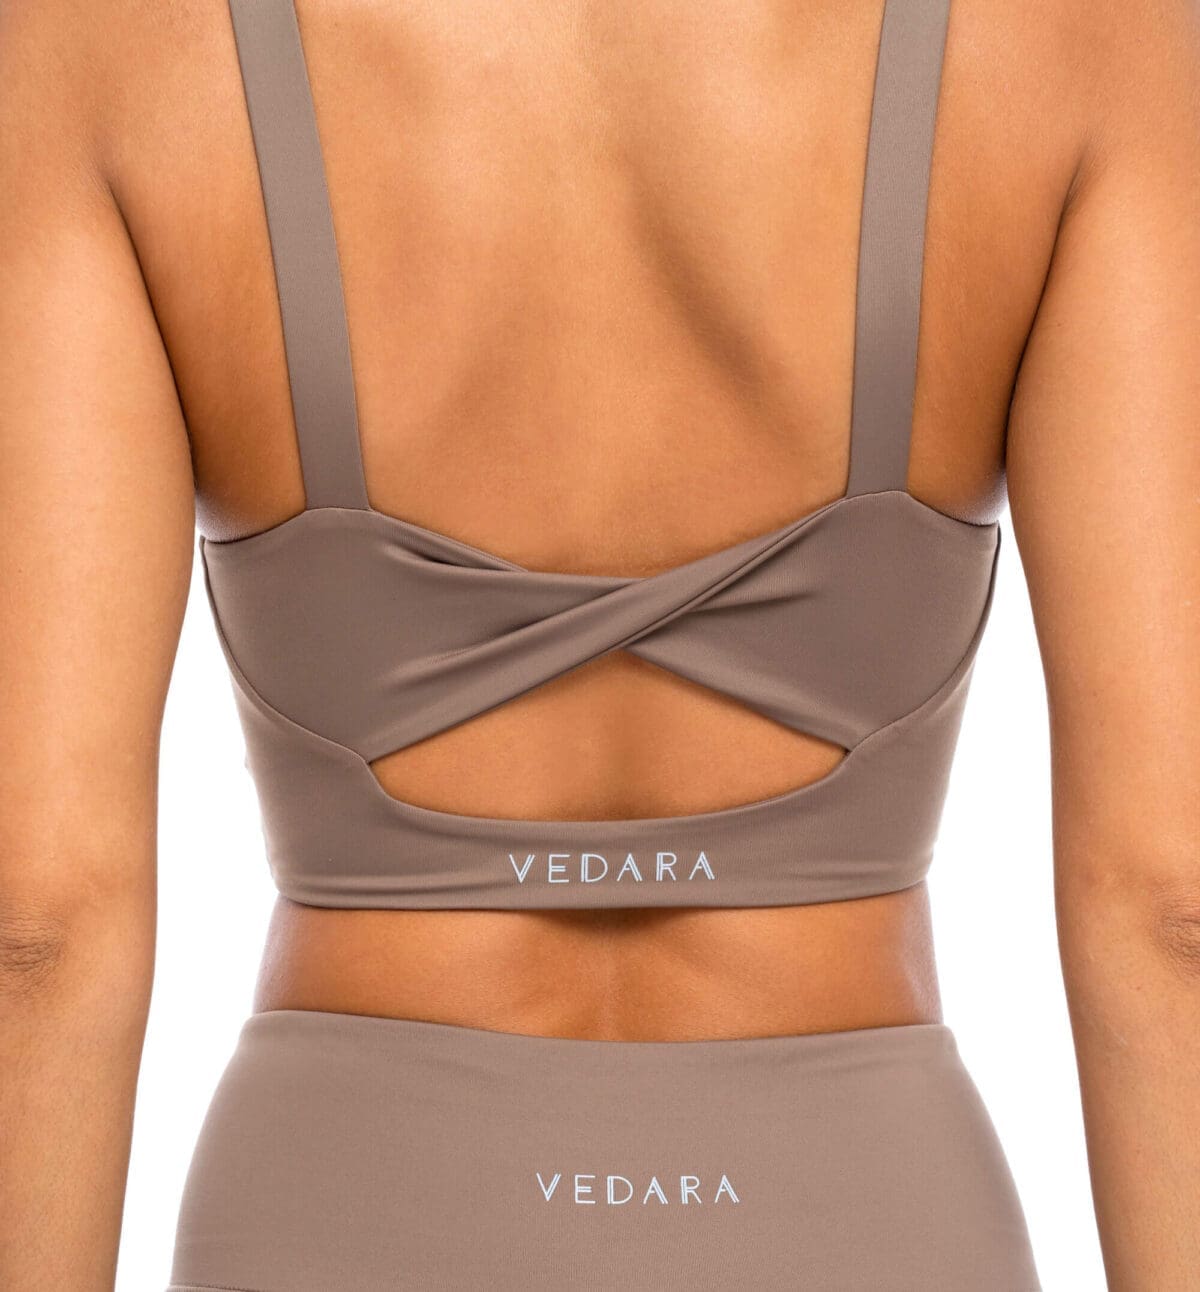 Sport-BH, Leggings, Yoga Bra in Taupe mit Vedara Logo